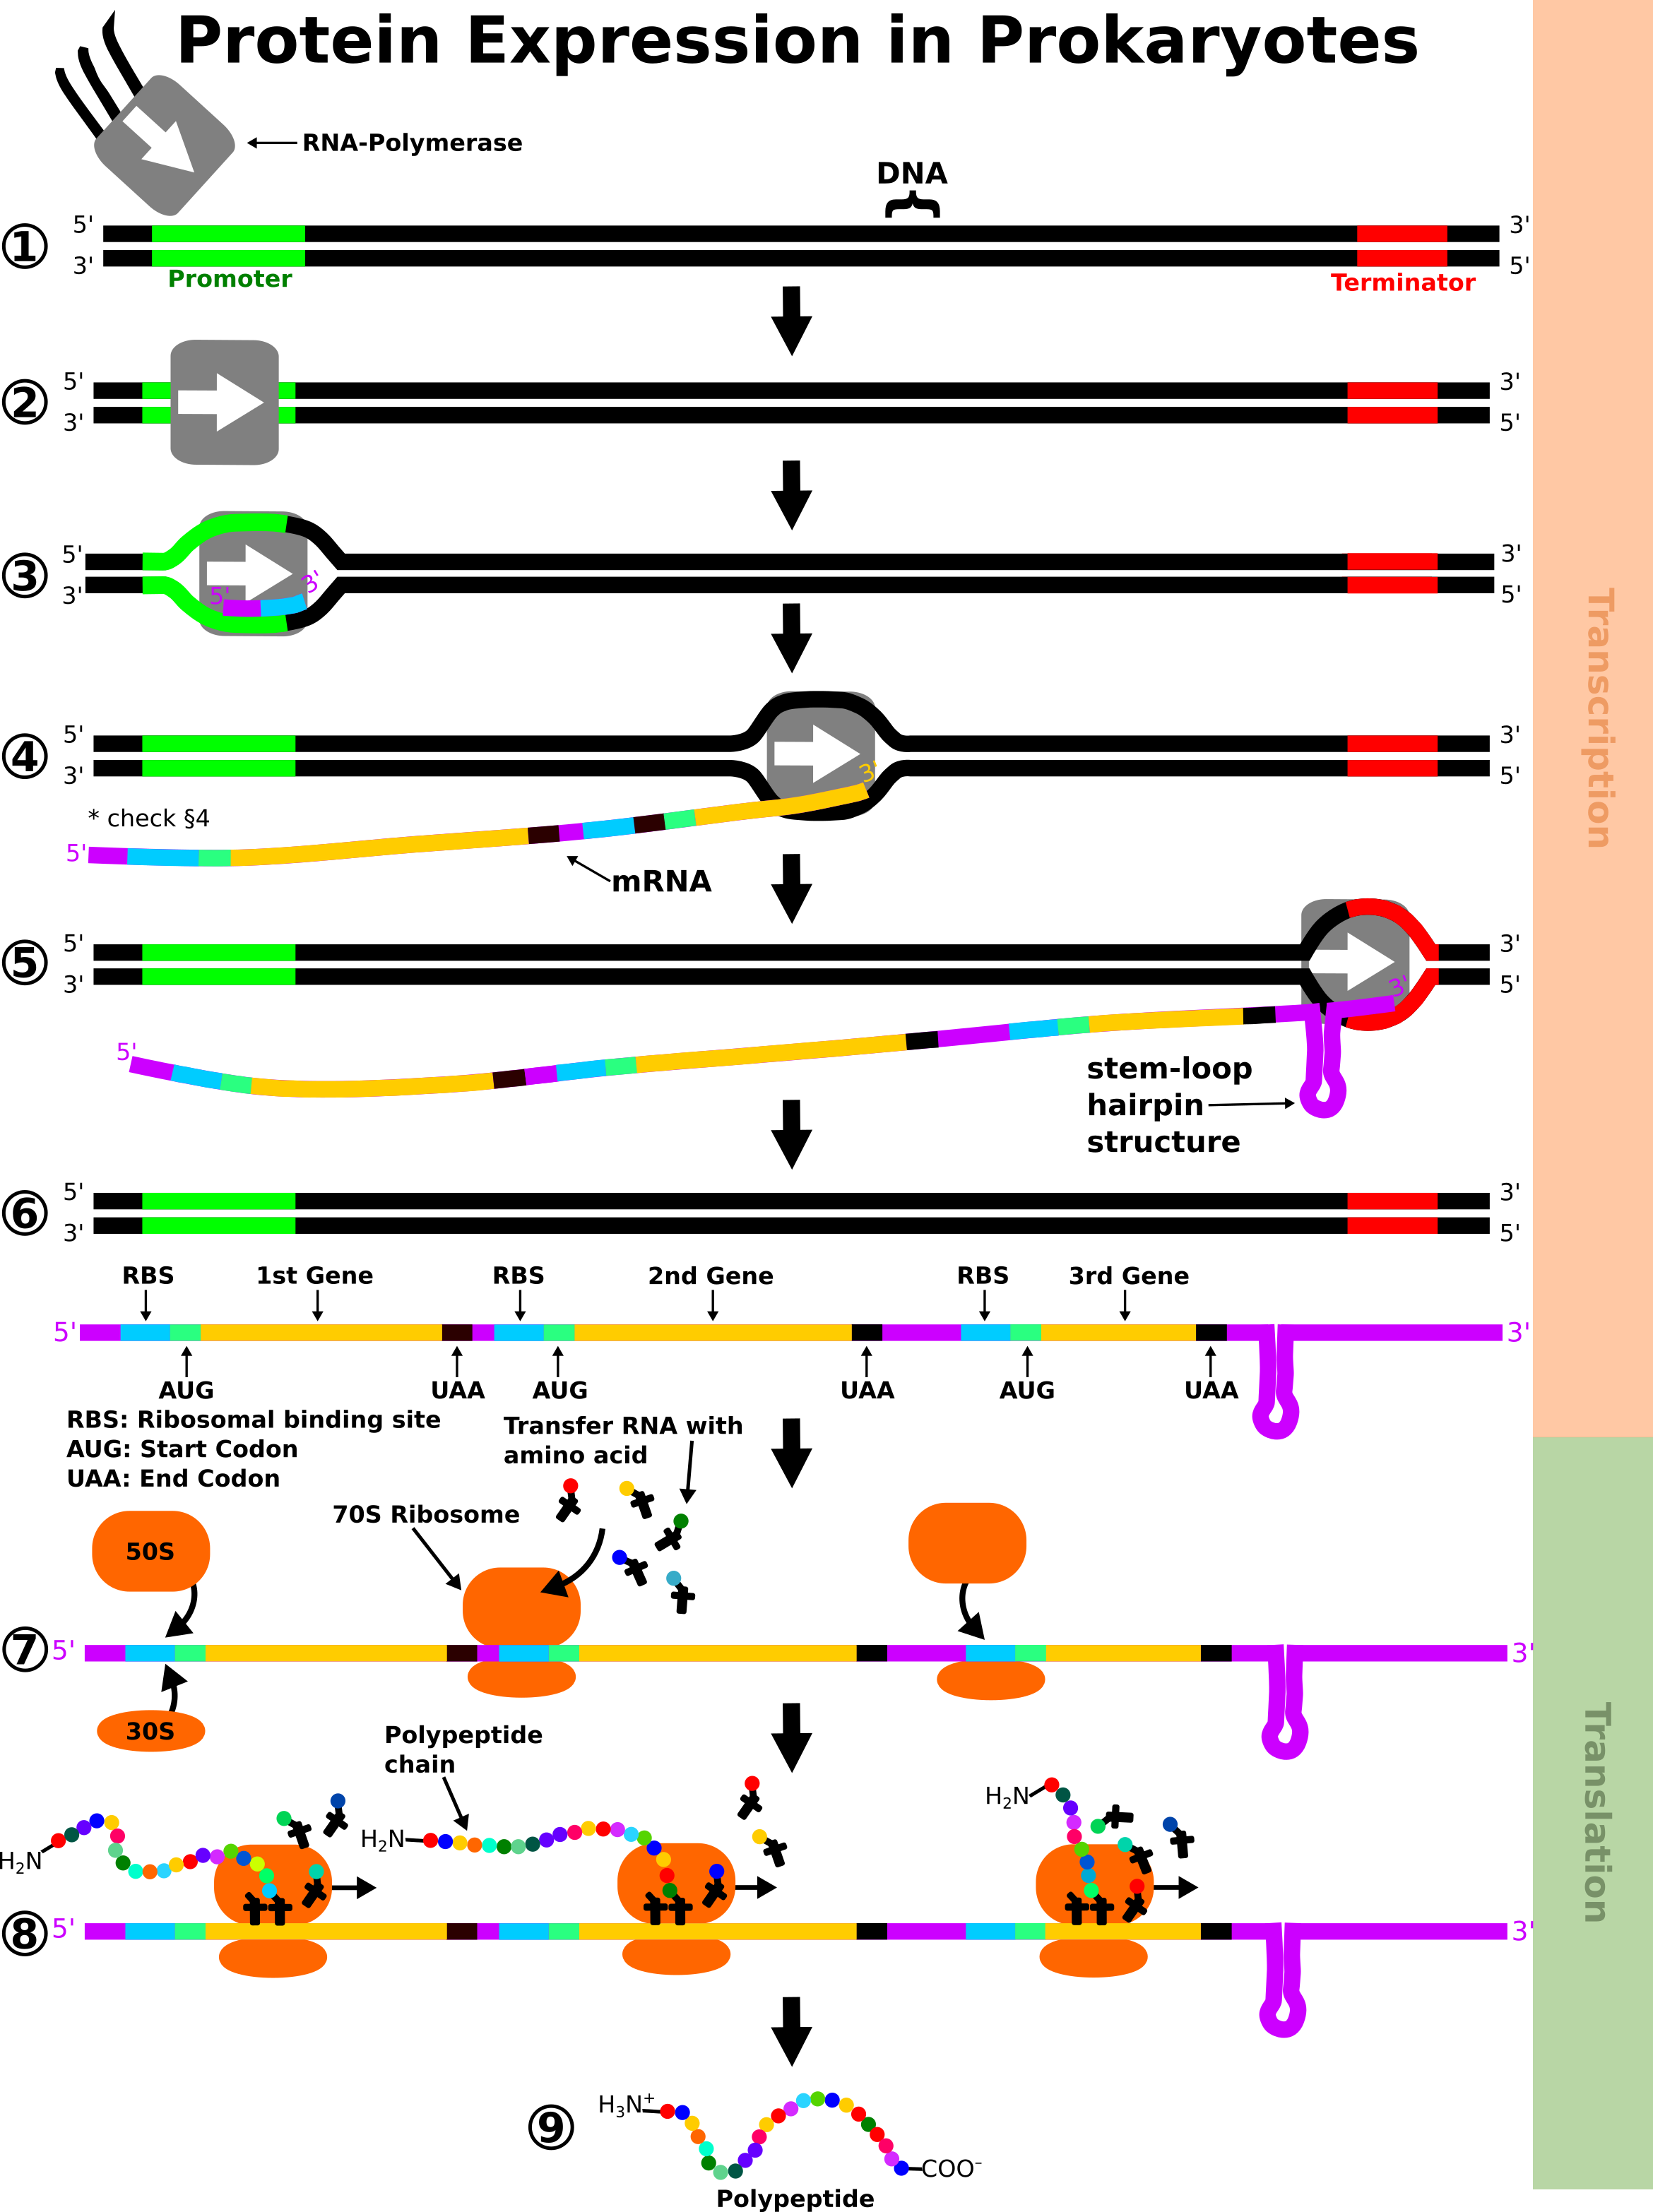 Protein Expression in Prokaryotes